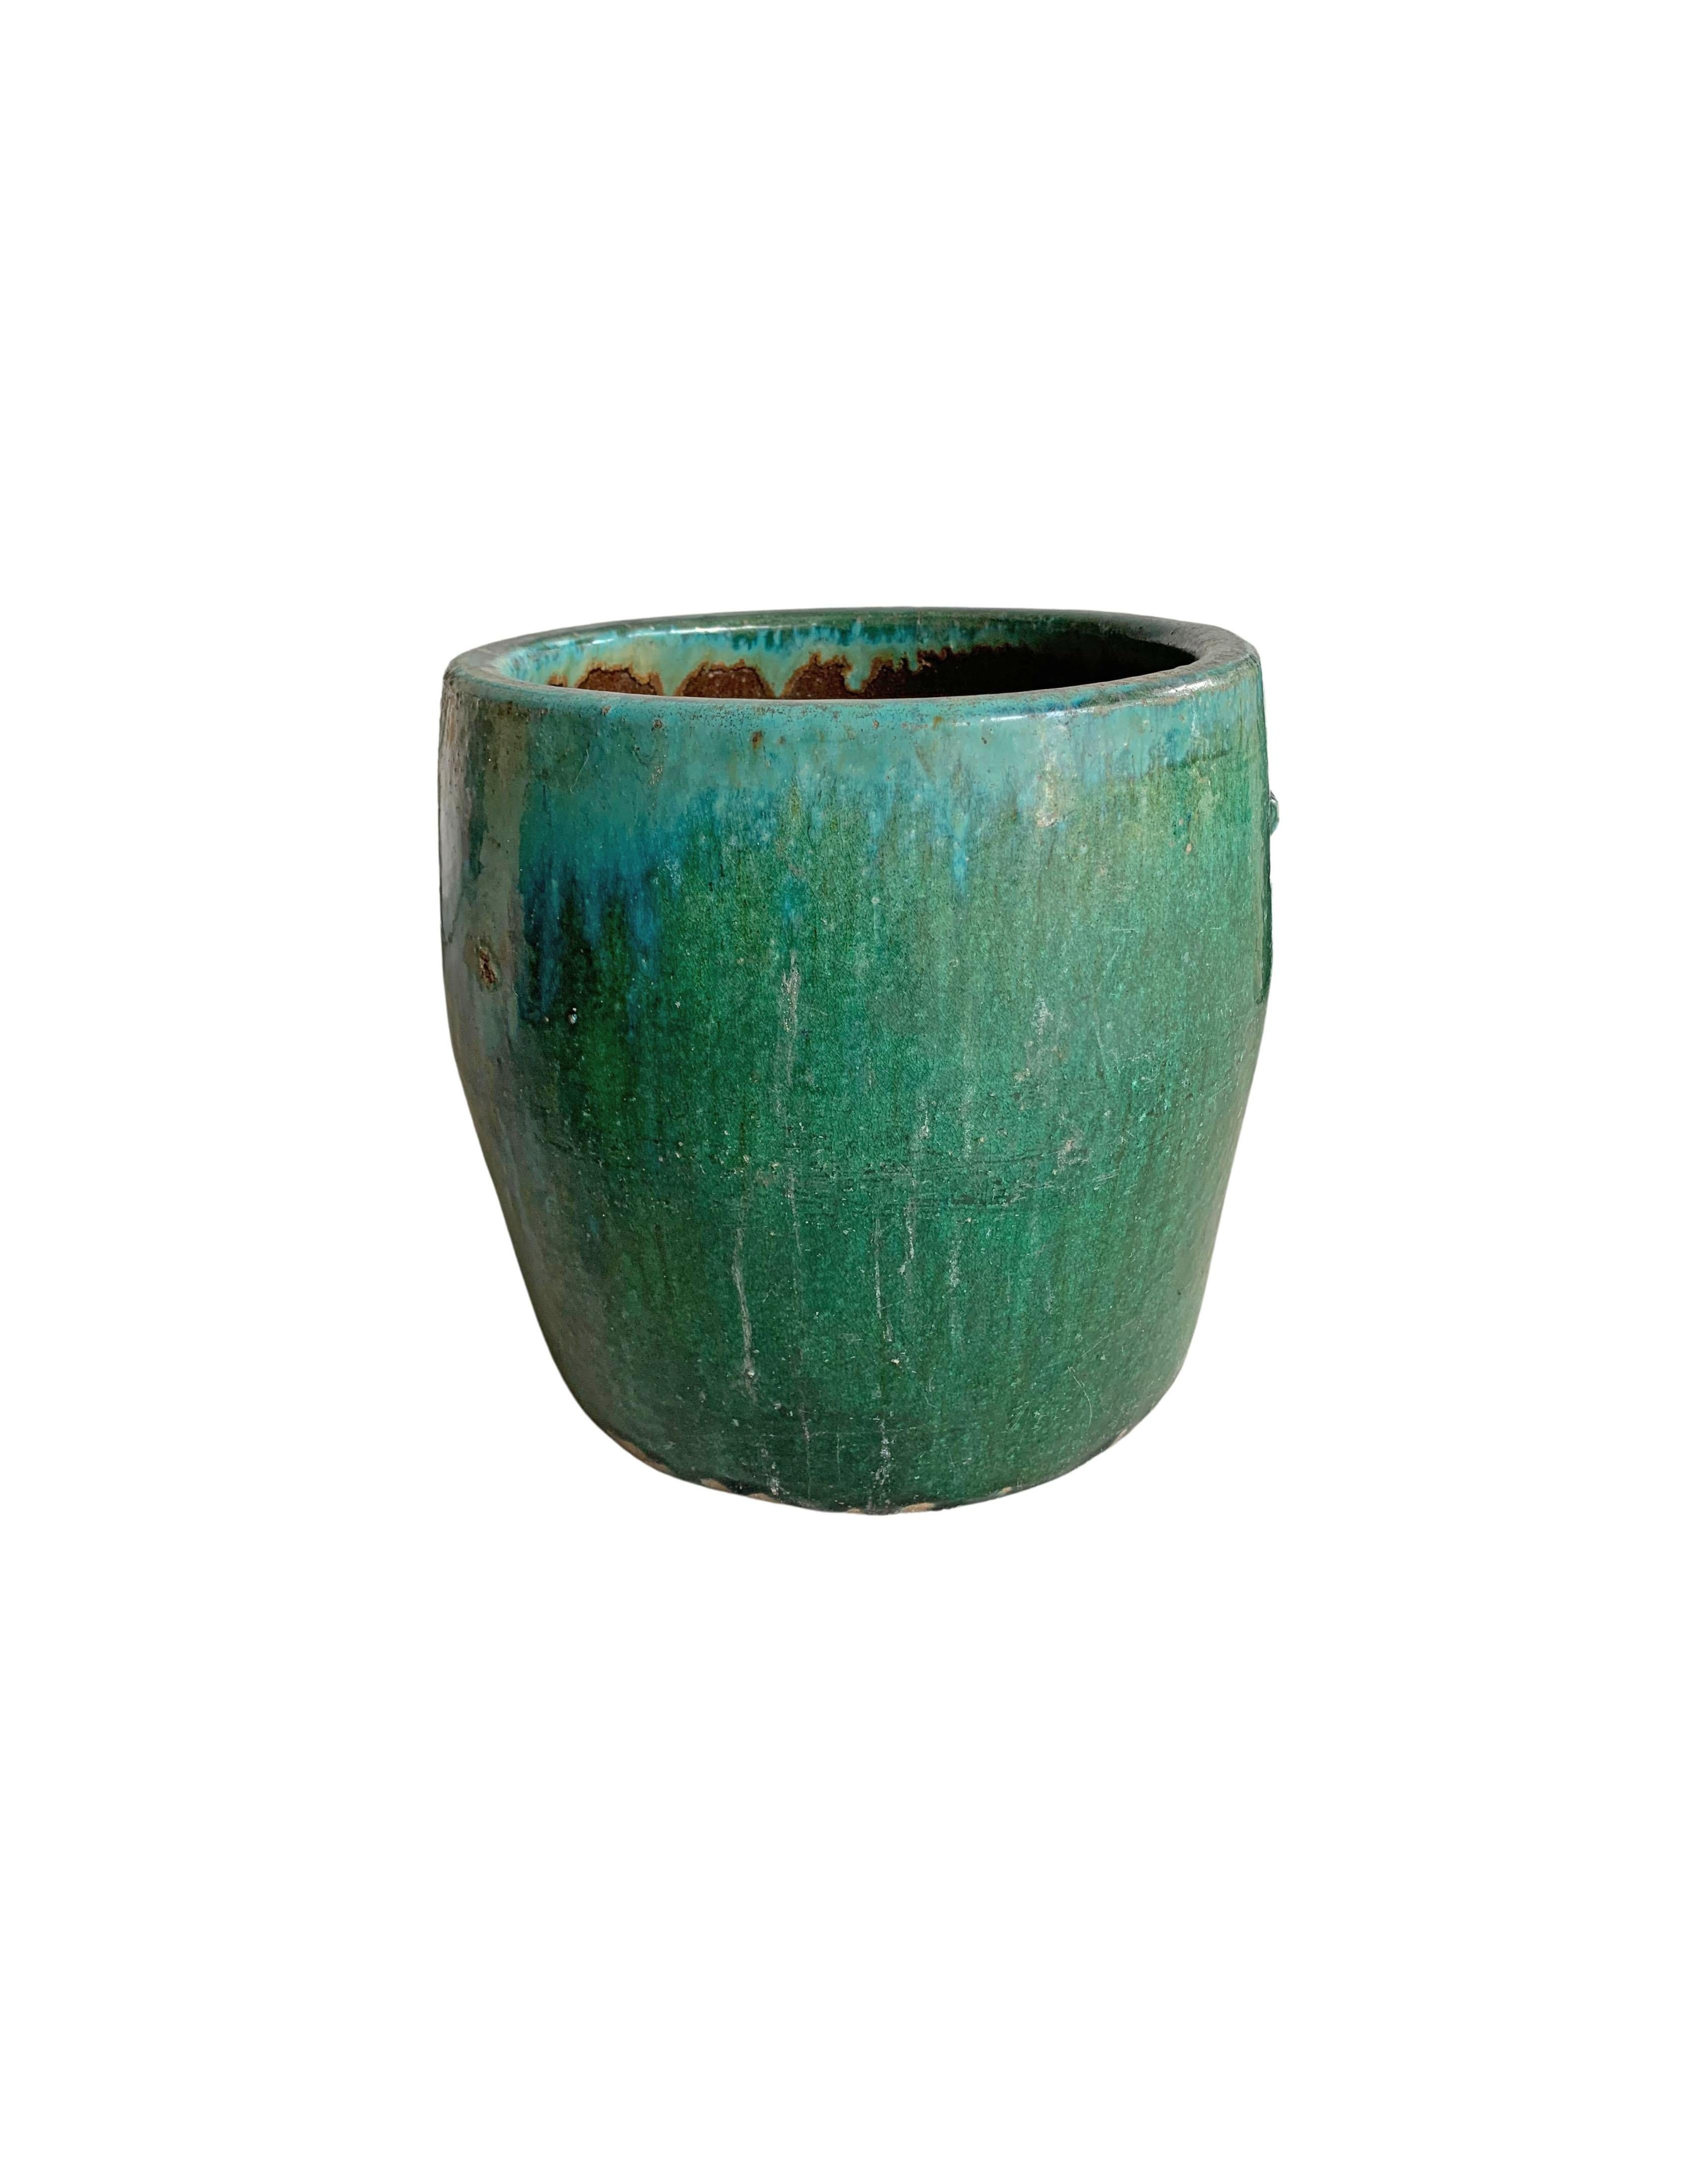 Qing Chinese Green Glazed Ceramic Pork Lard Storage Jar / Planter, c. 1900 For Sale